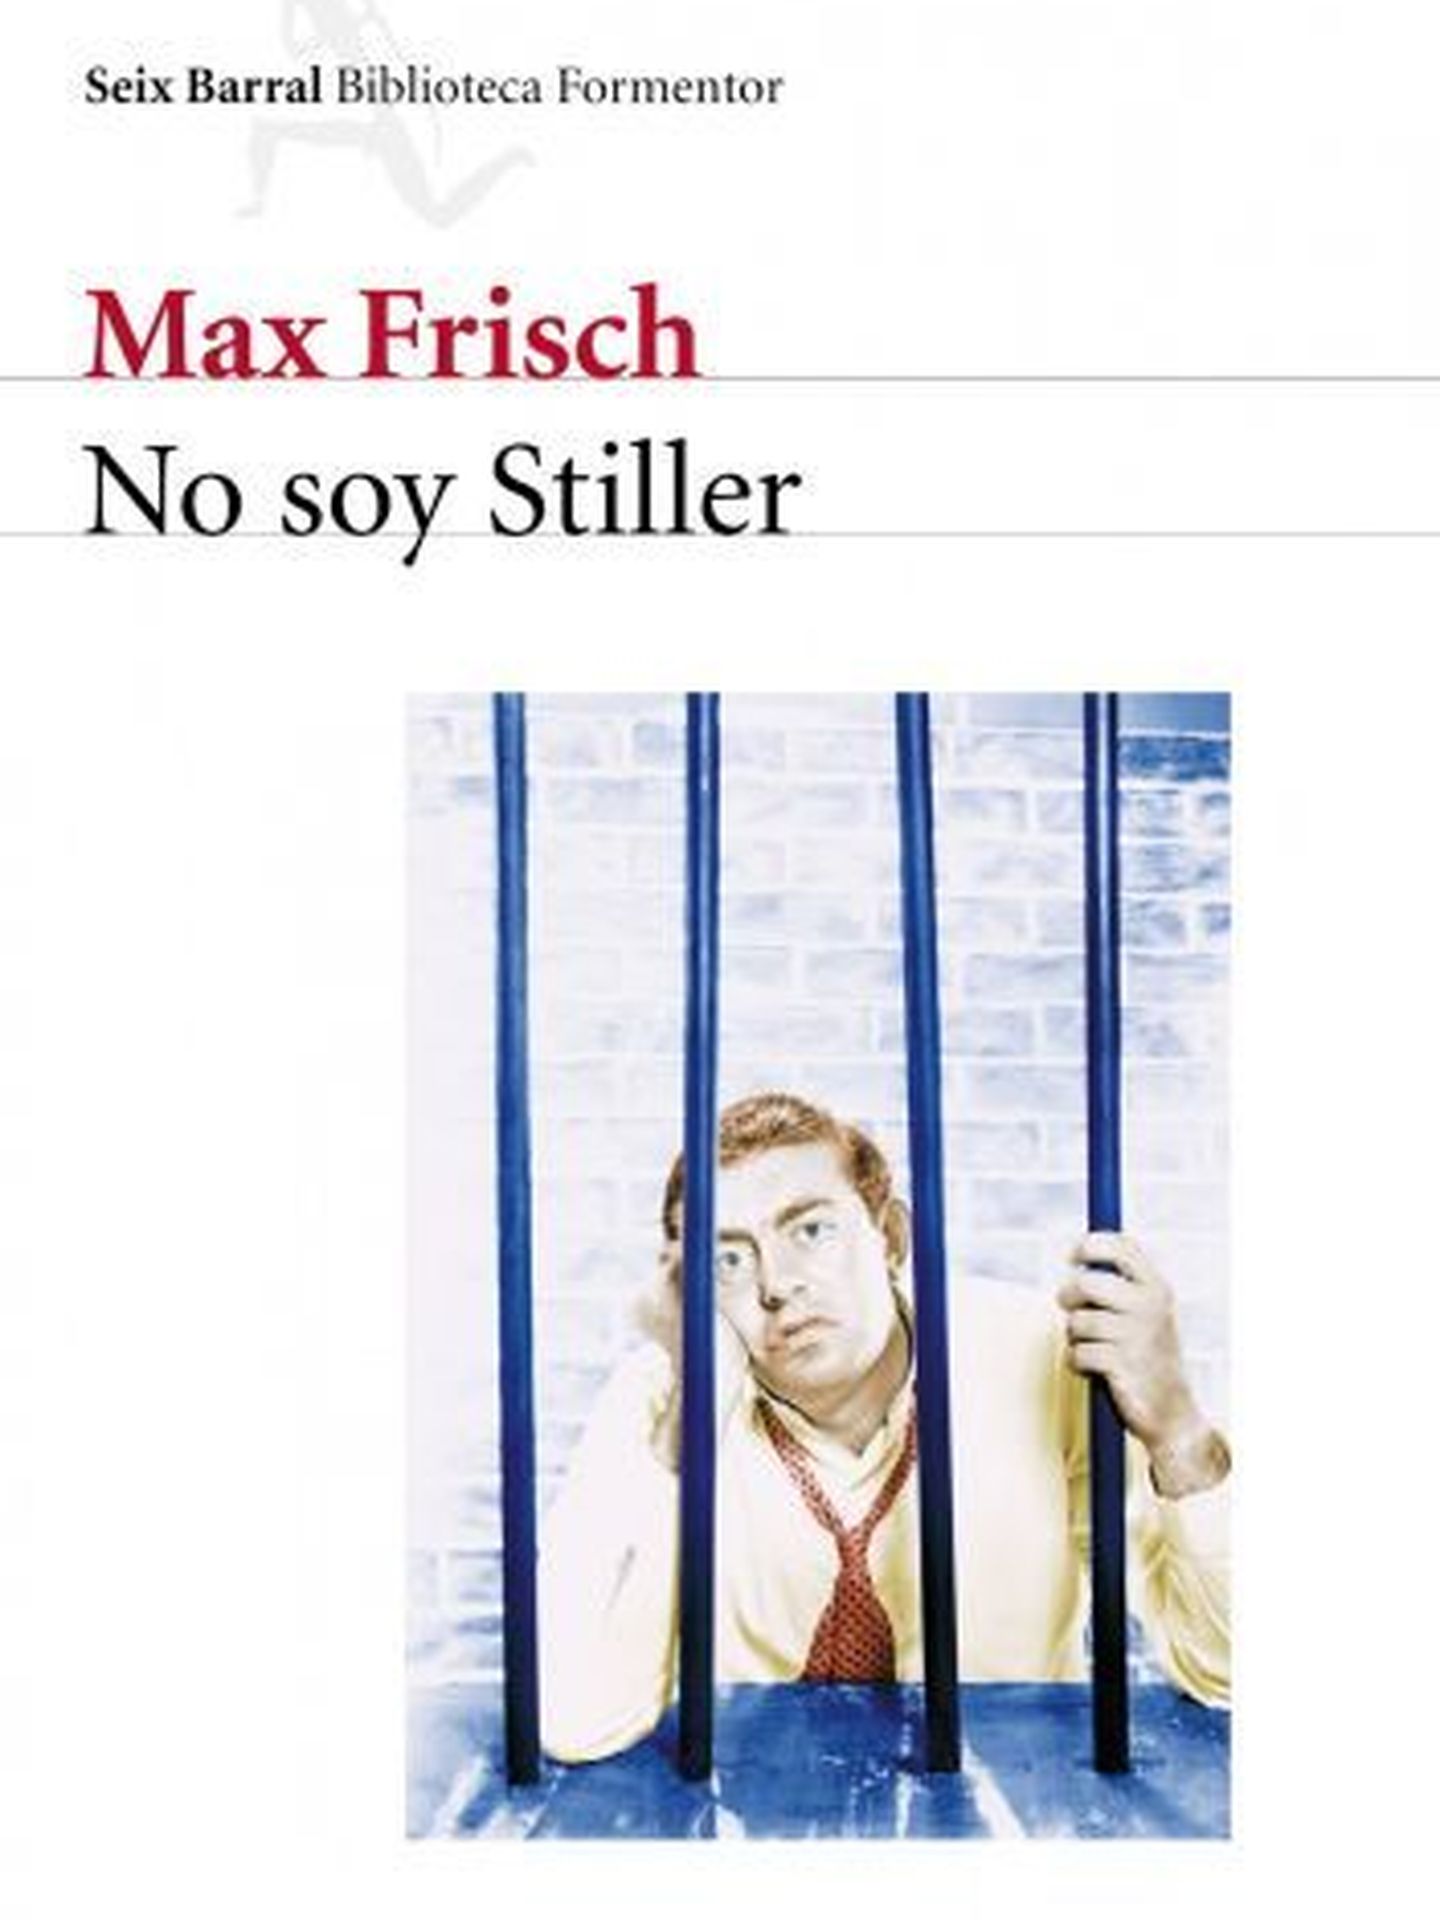 Portada de 'No soy Stiller', de Max Frisch